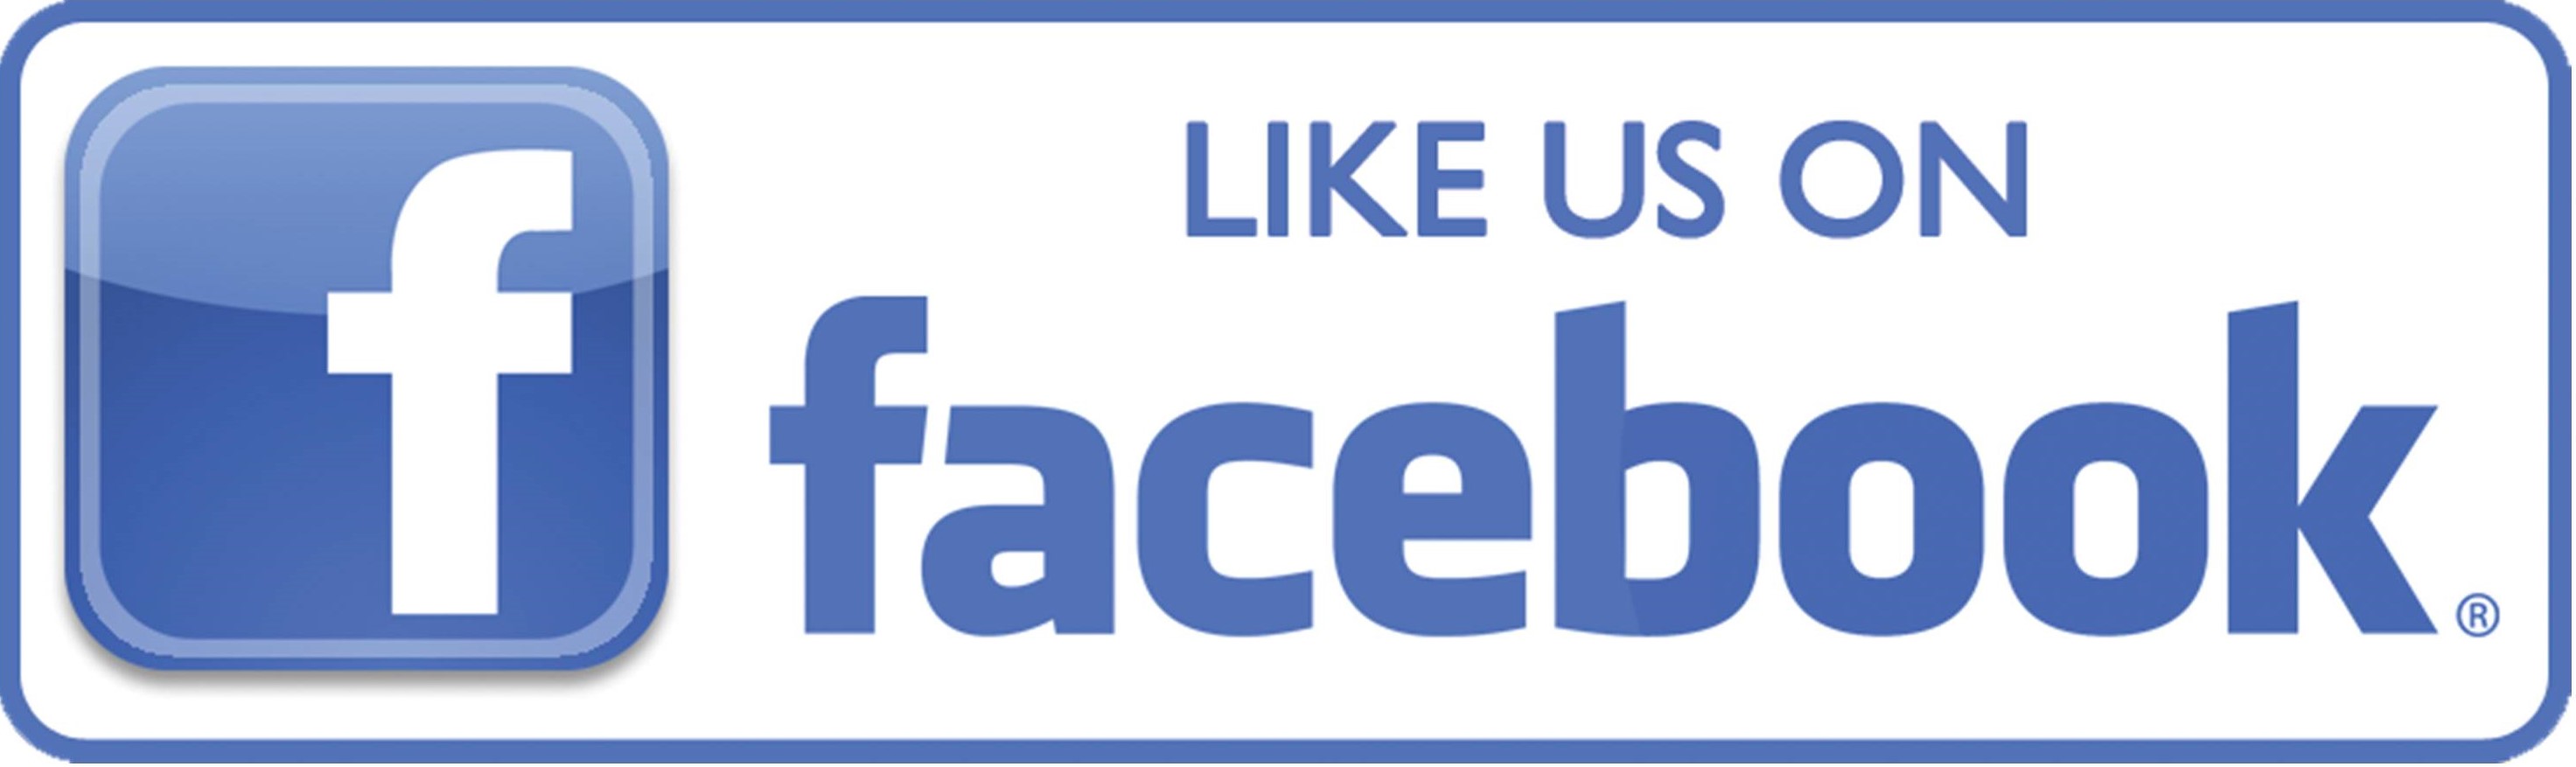 Like Us on Facebook Banner